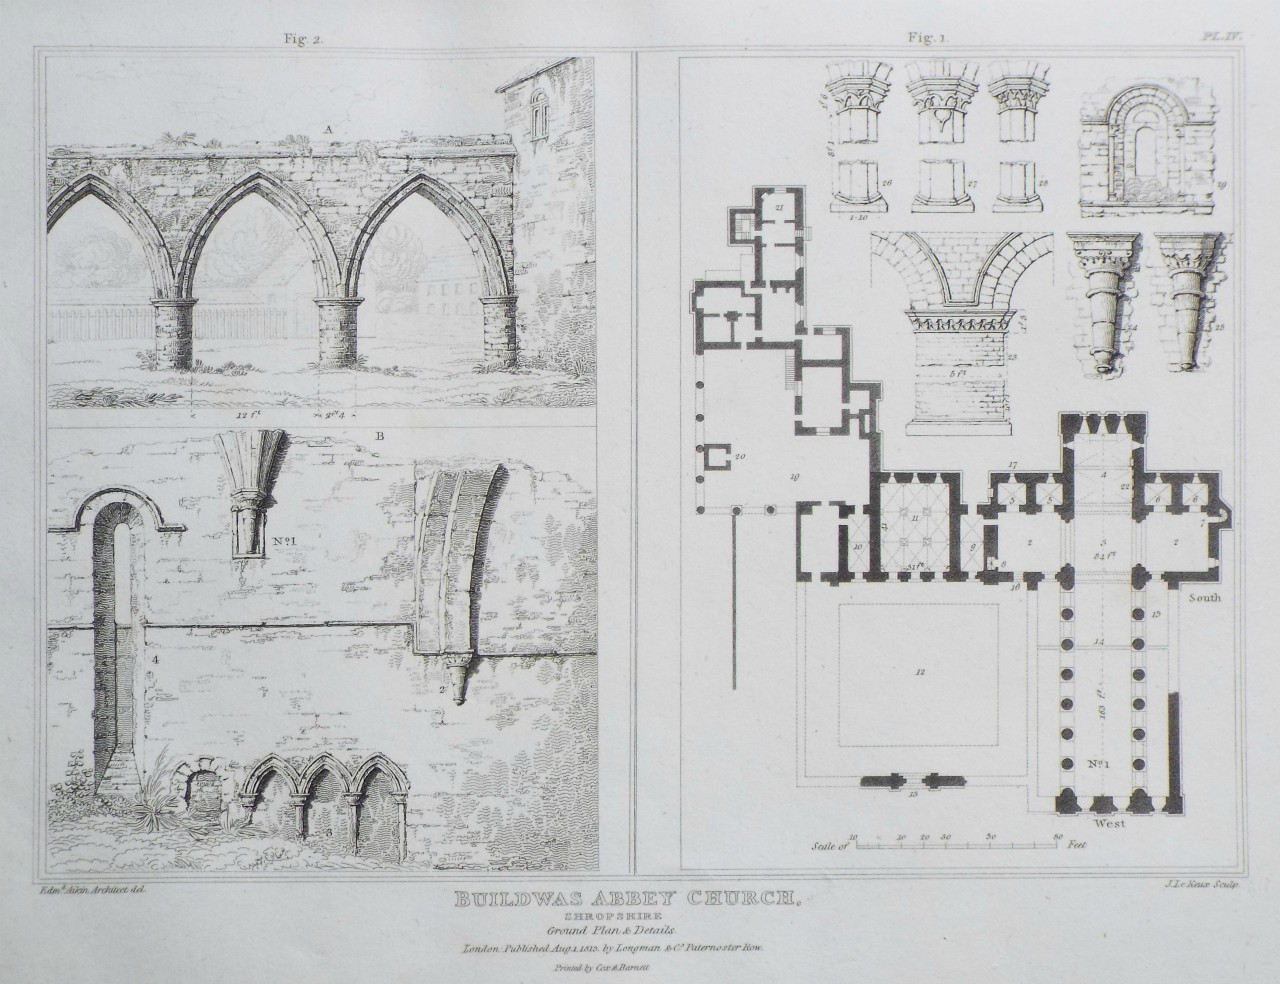 Print - Buildwas Abbey-Church: Shropshire. Ground Plan & Details. - Le